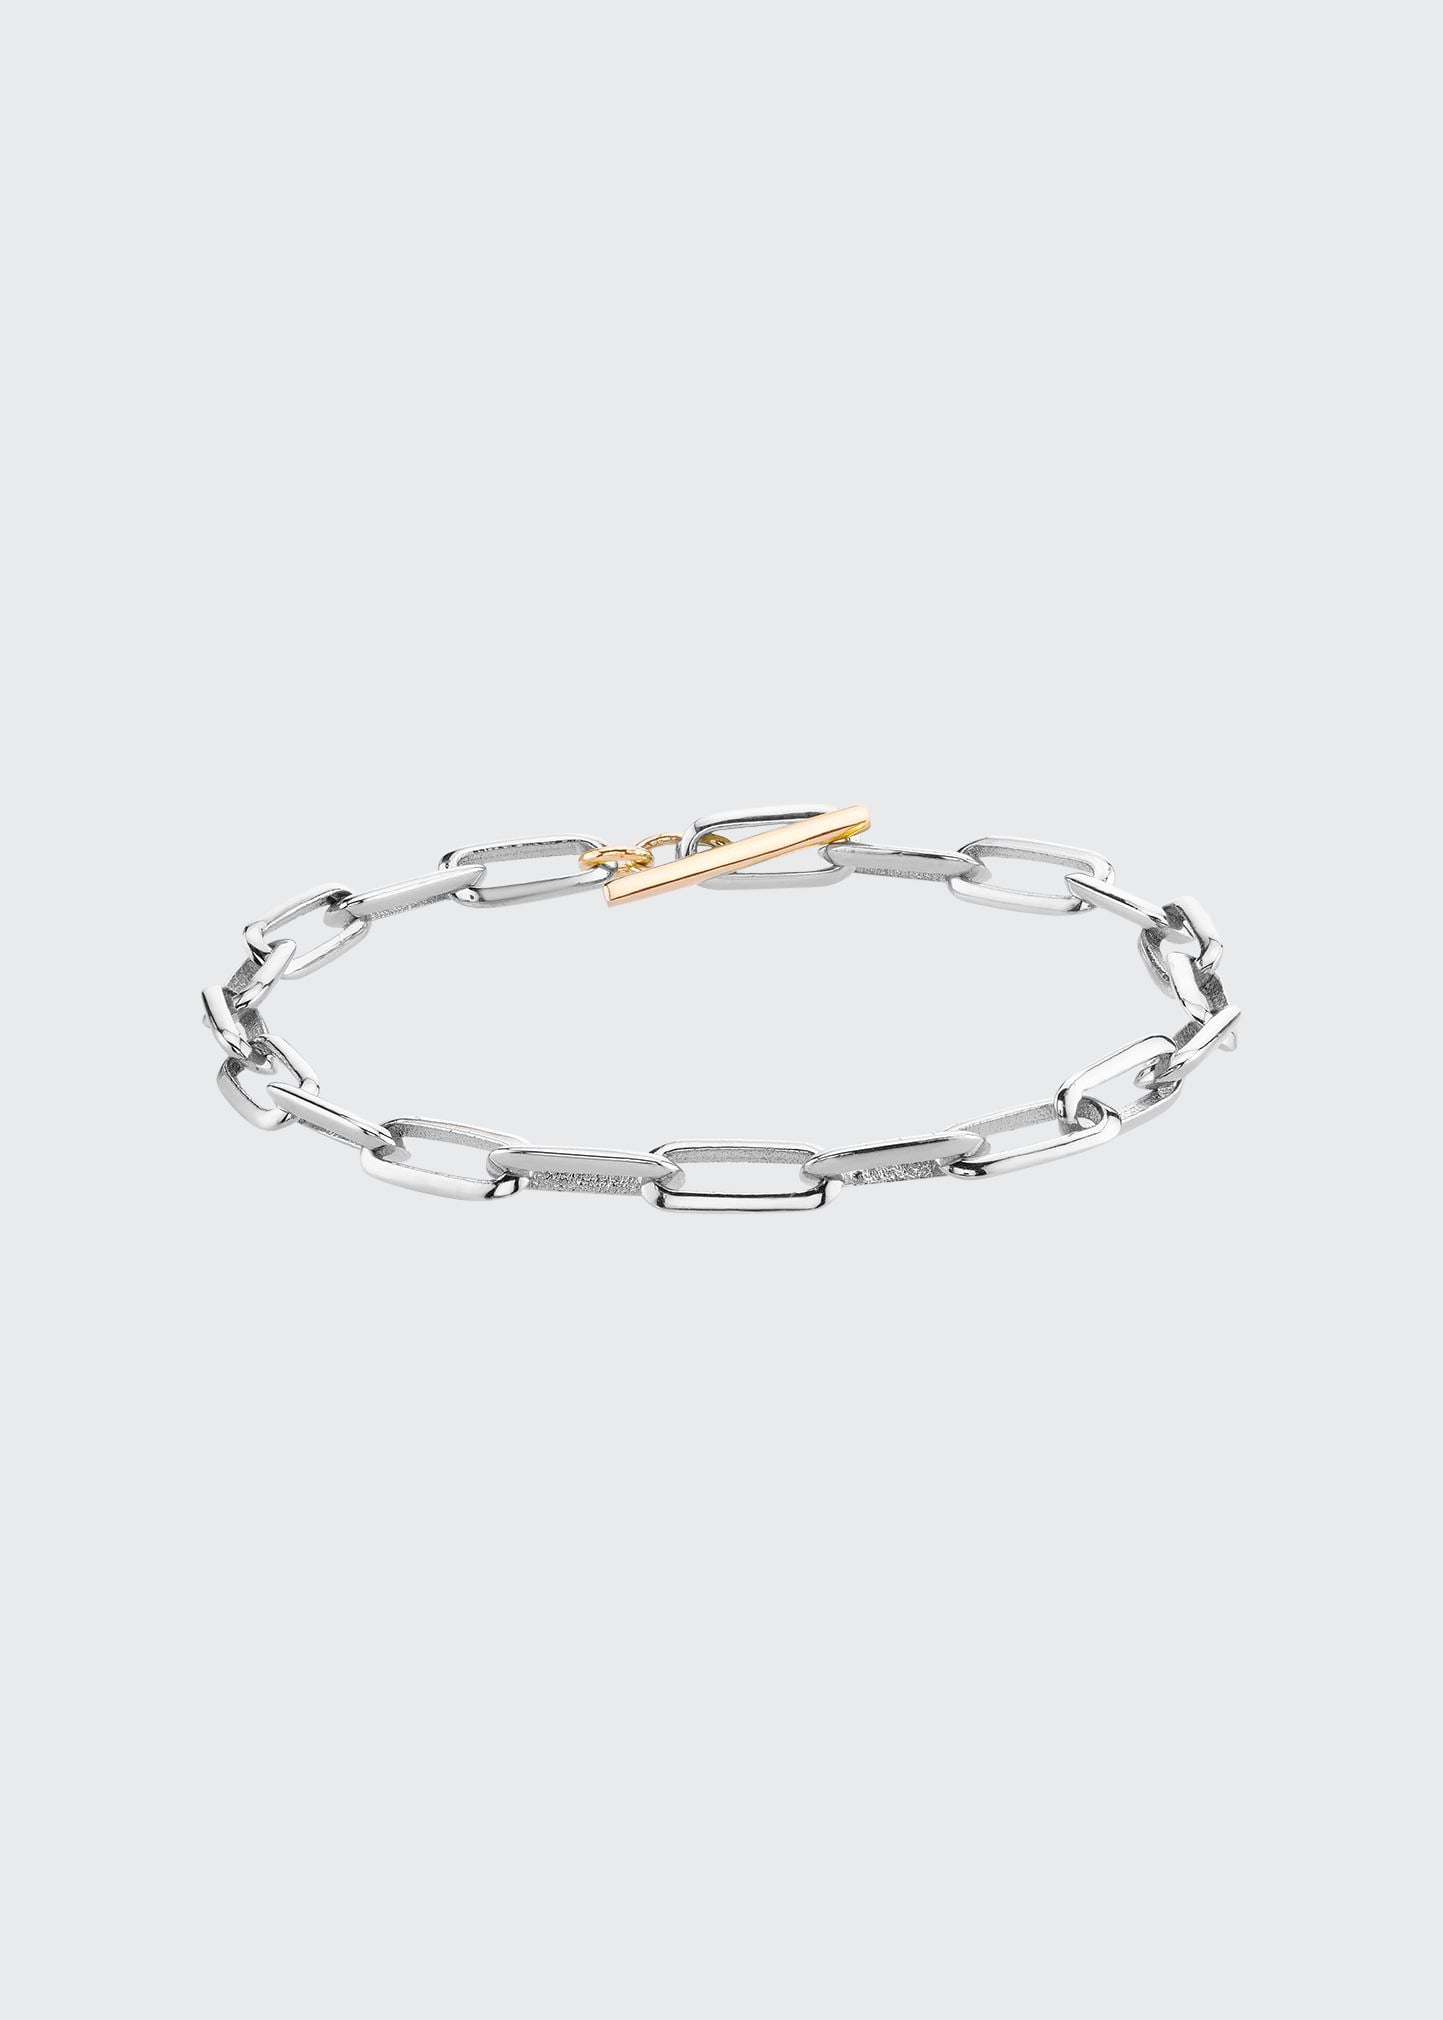 Lizzie Mandler Fine Jewelry Silver Edge Oval Link Chain Bracelet